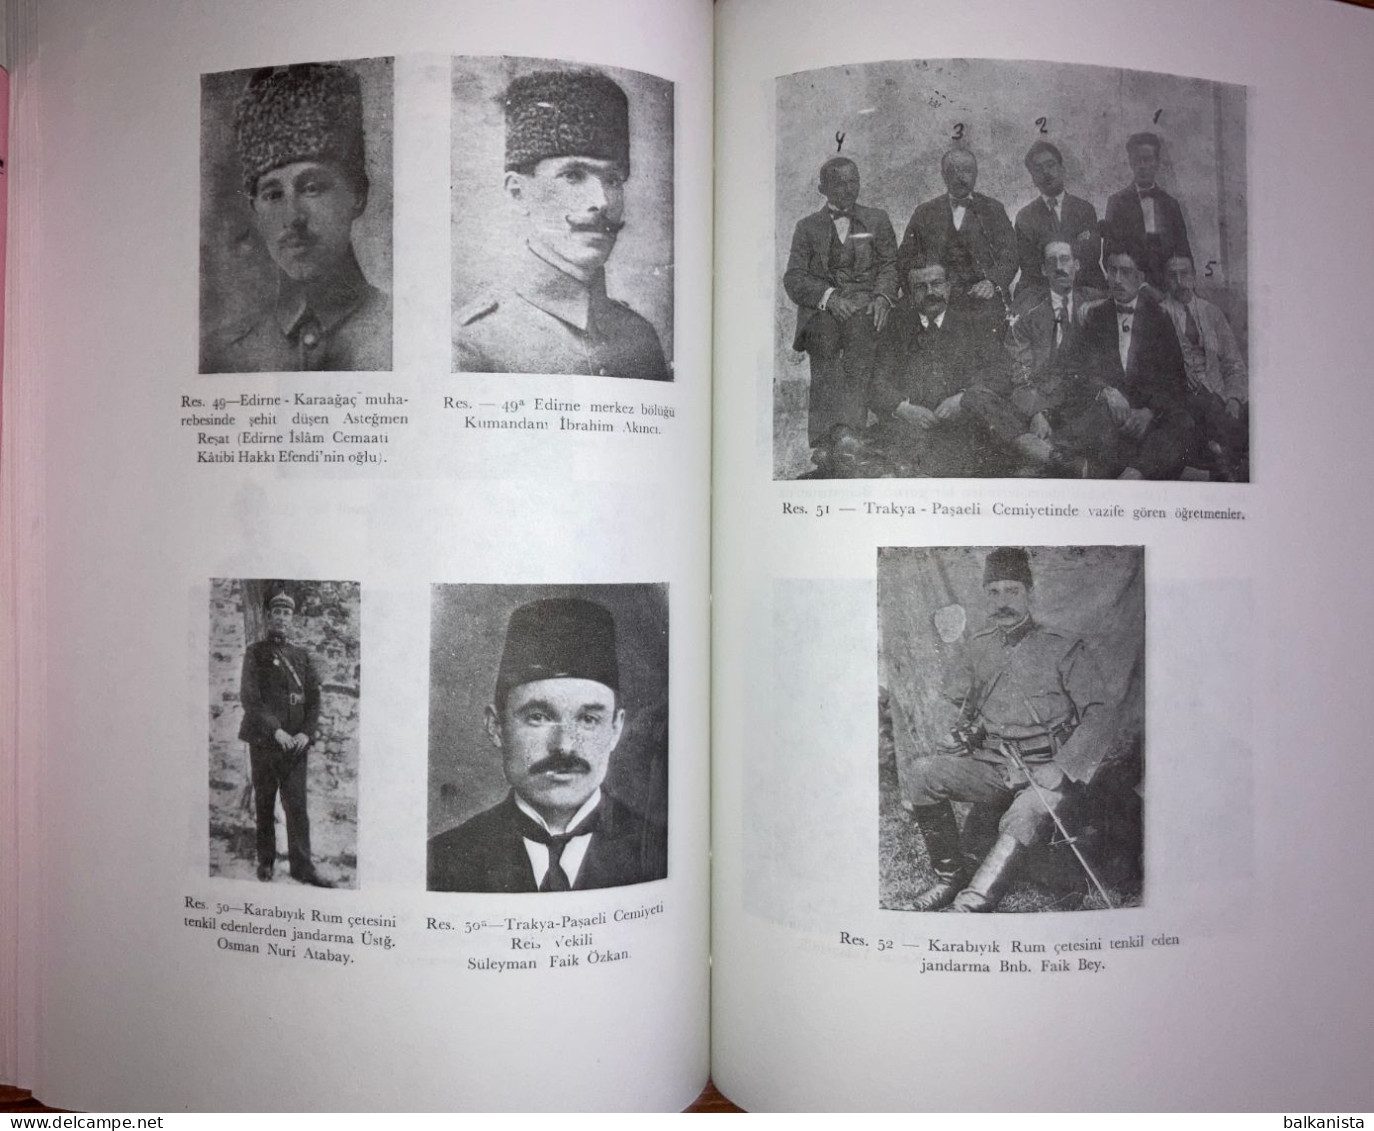 Trakya'da Milli Mucadele Tevfik Bıyıklioglu Ottoman Turkish History Thrace - Midden-Oosten